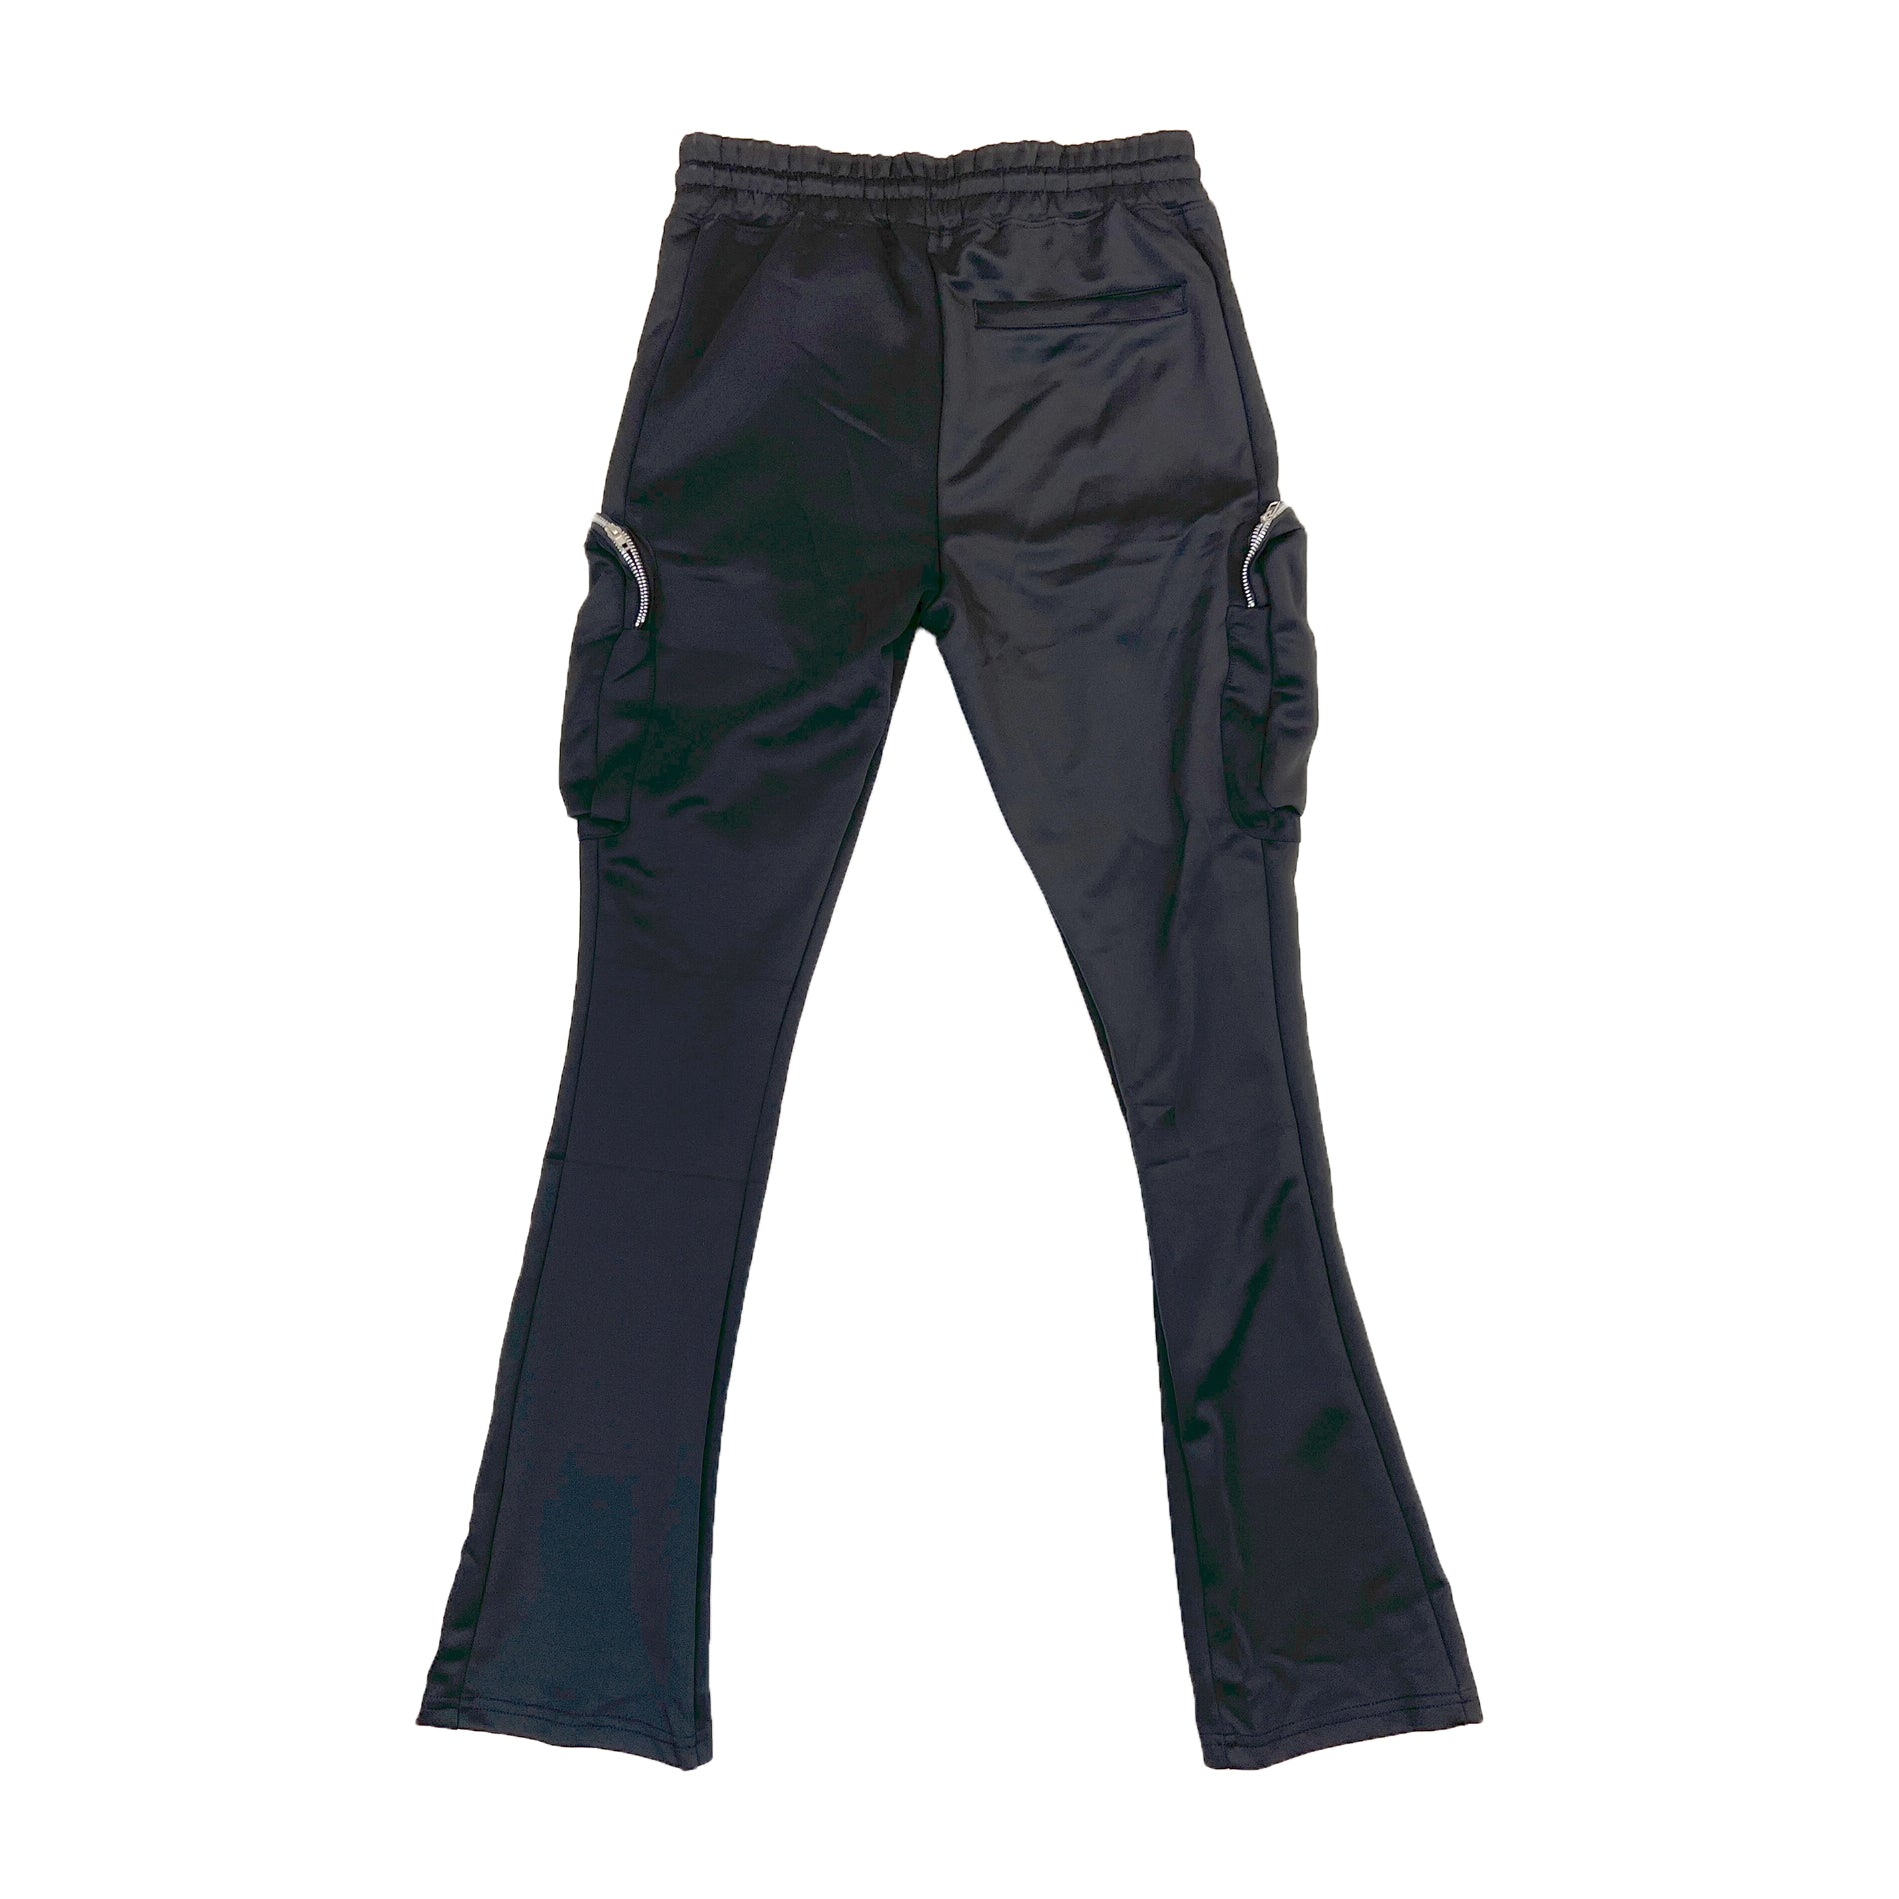 Buy U.S. Polo Assn. Denim Co. Collegiate Cotton Track Pants - NNNOW.com